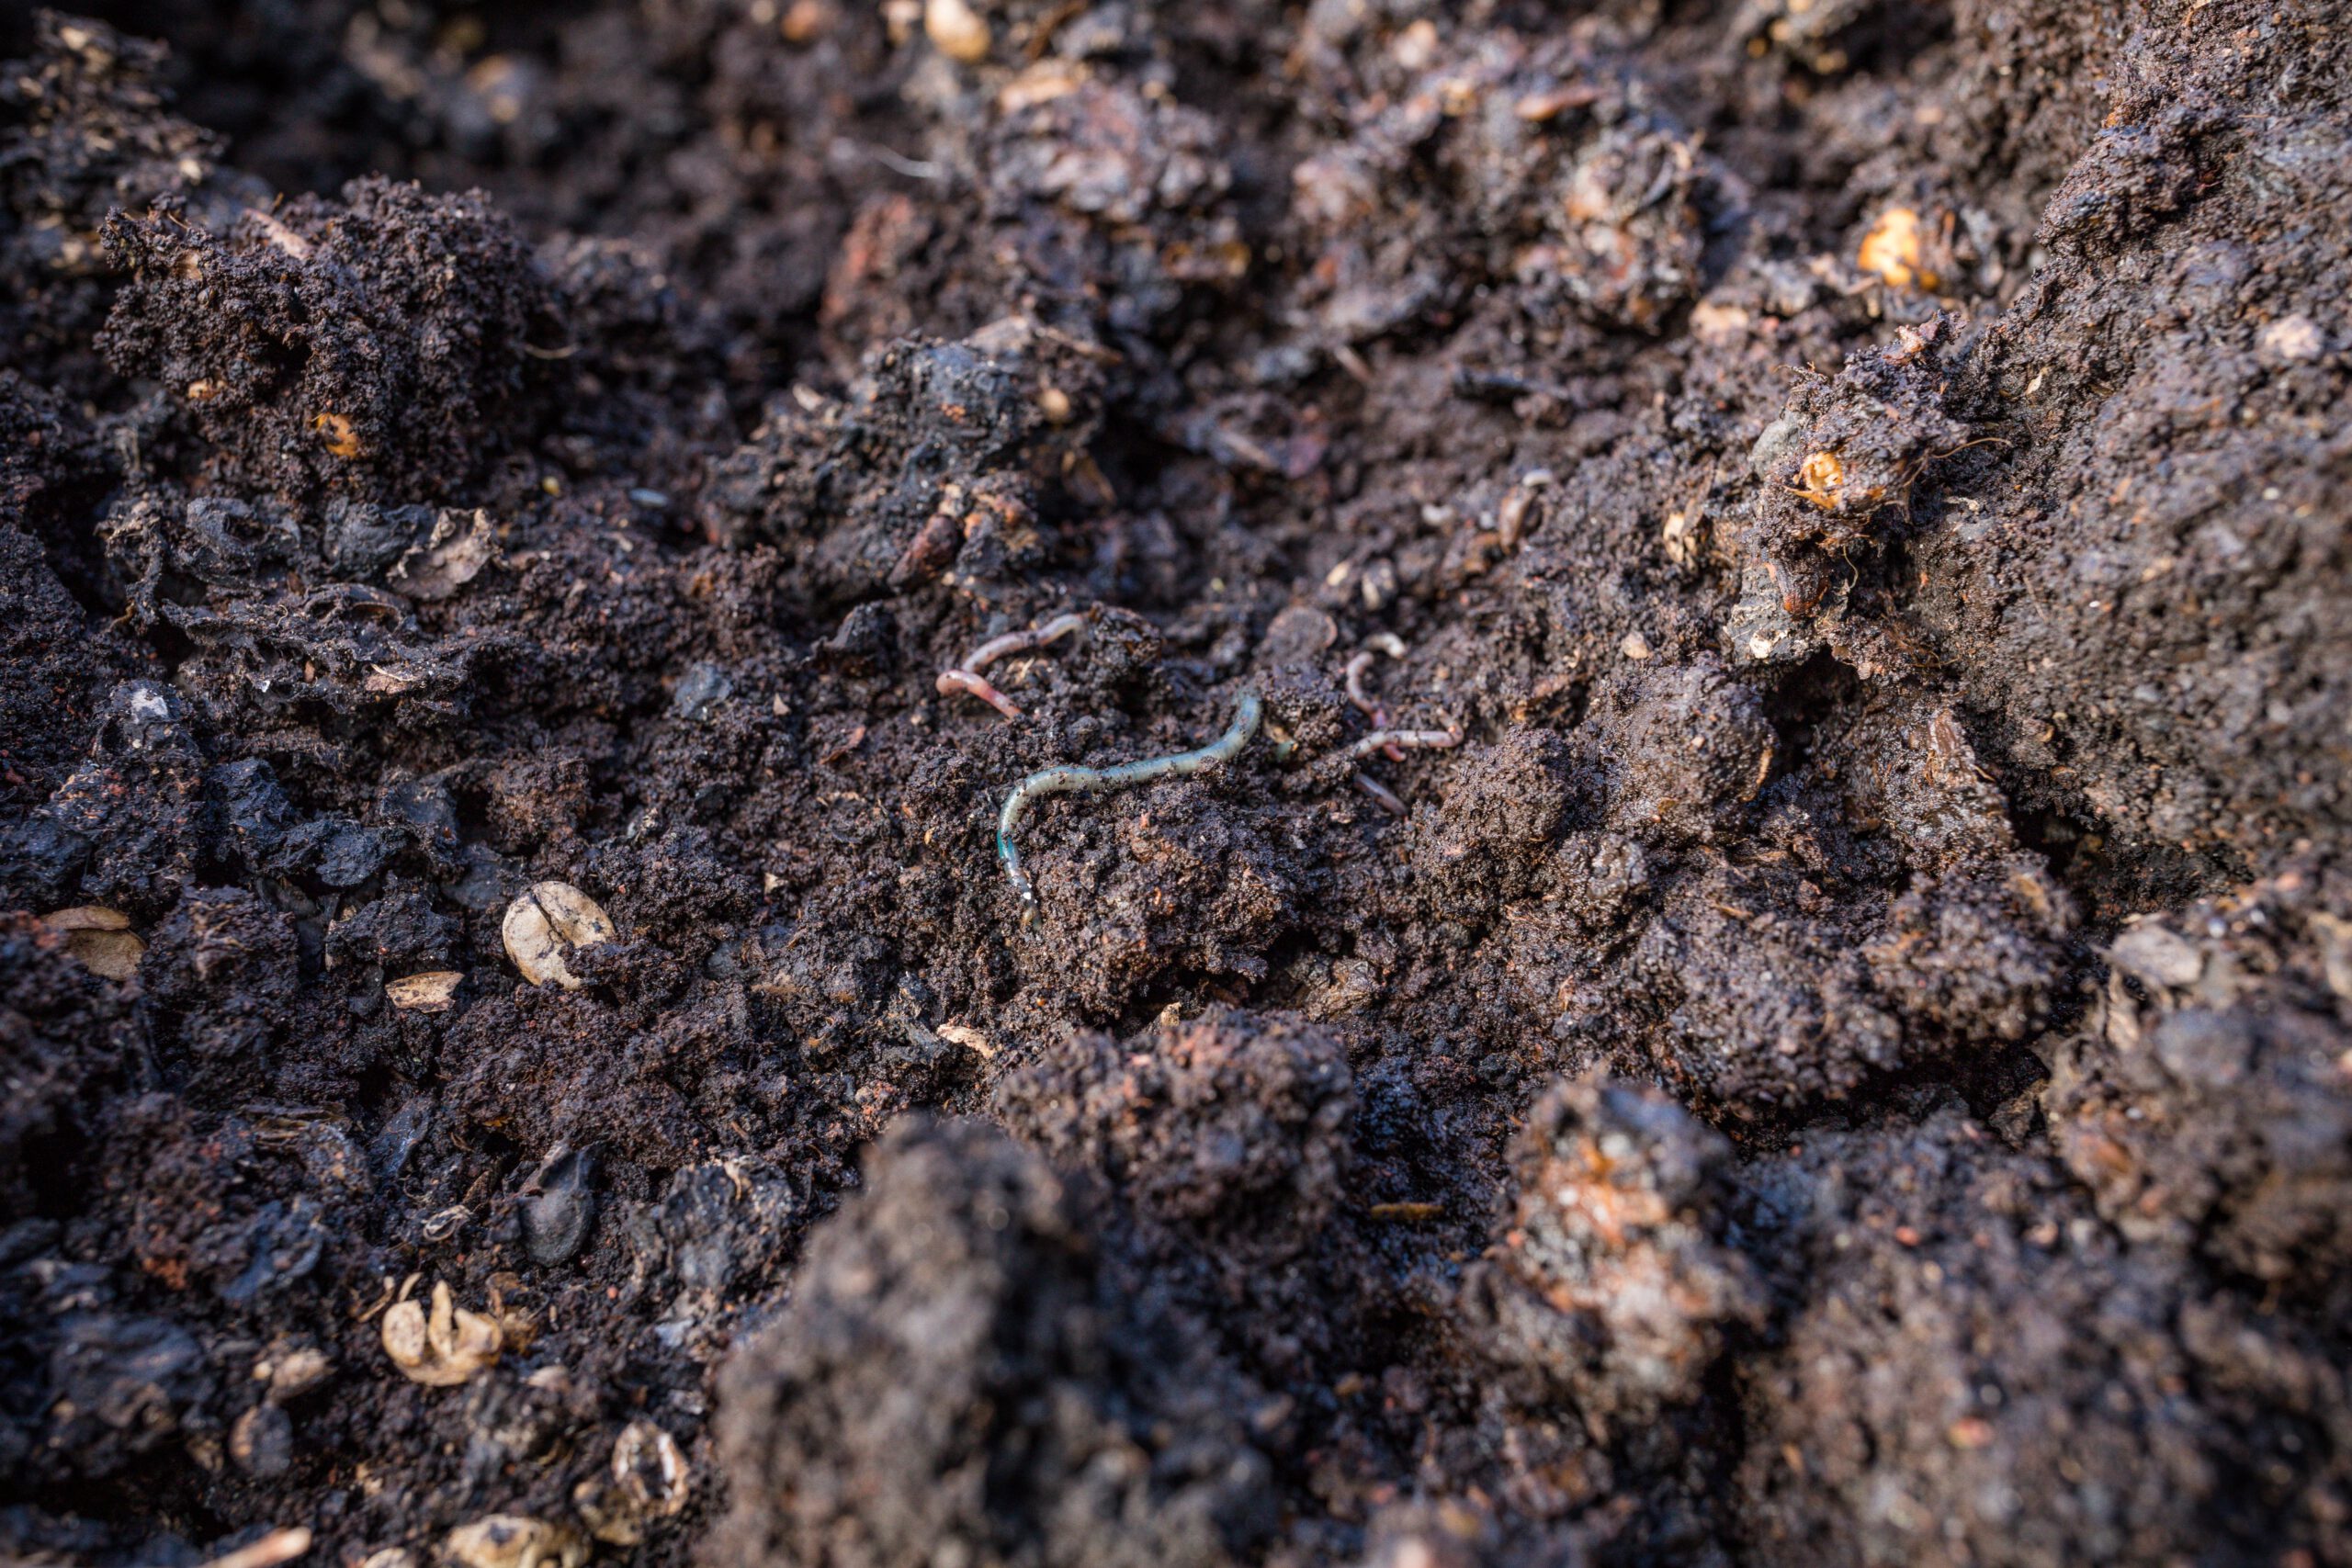 Earthworms on Moist Dirt Ground. Photo by Antony Trivet: https://www.pexels.com/photo/earthworms-on-moist-dirt-ground-12961954/